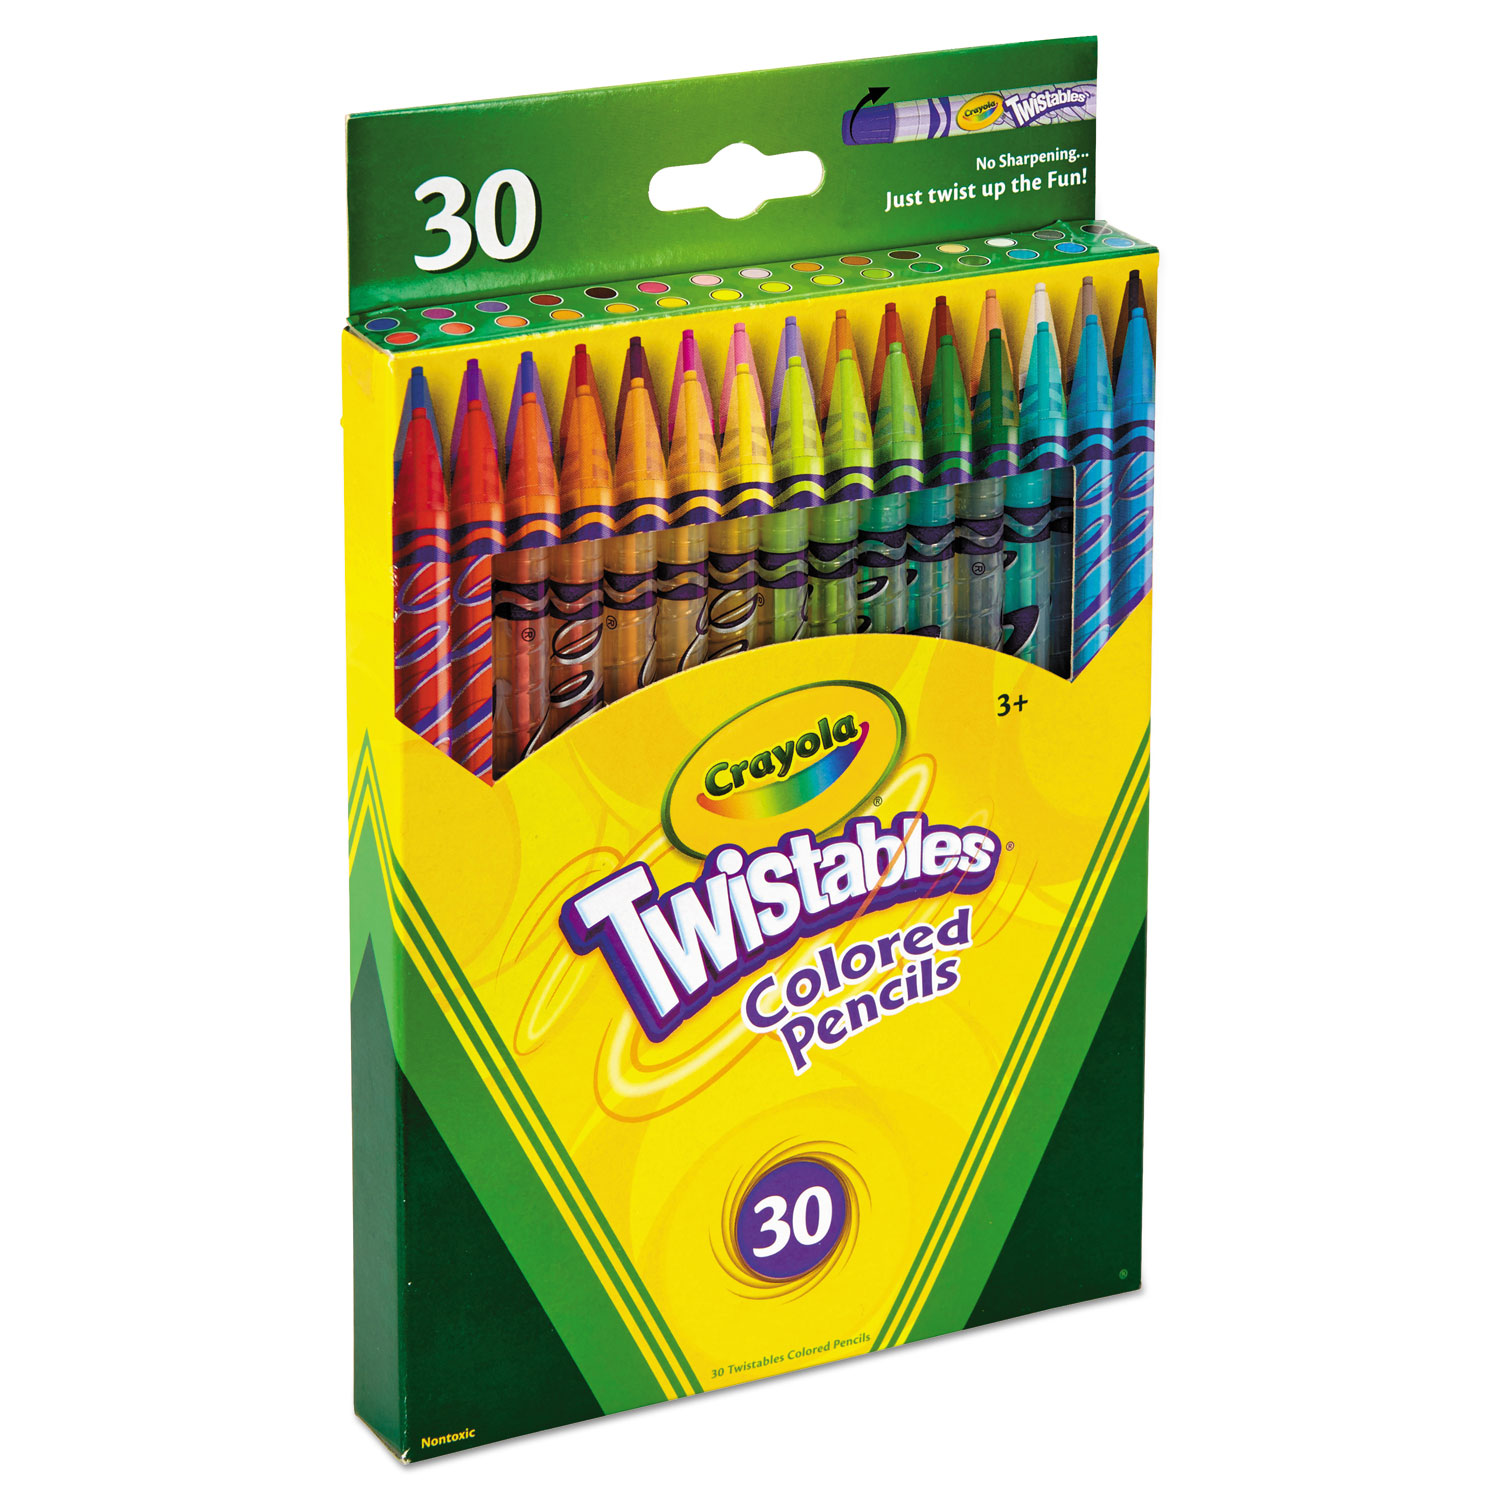 Twist-It Crayons Classpack - Pack of 240, Crayons